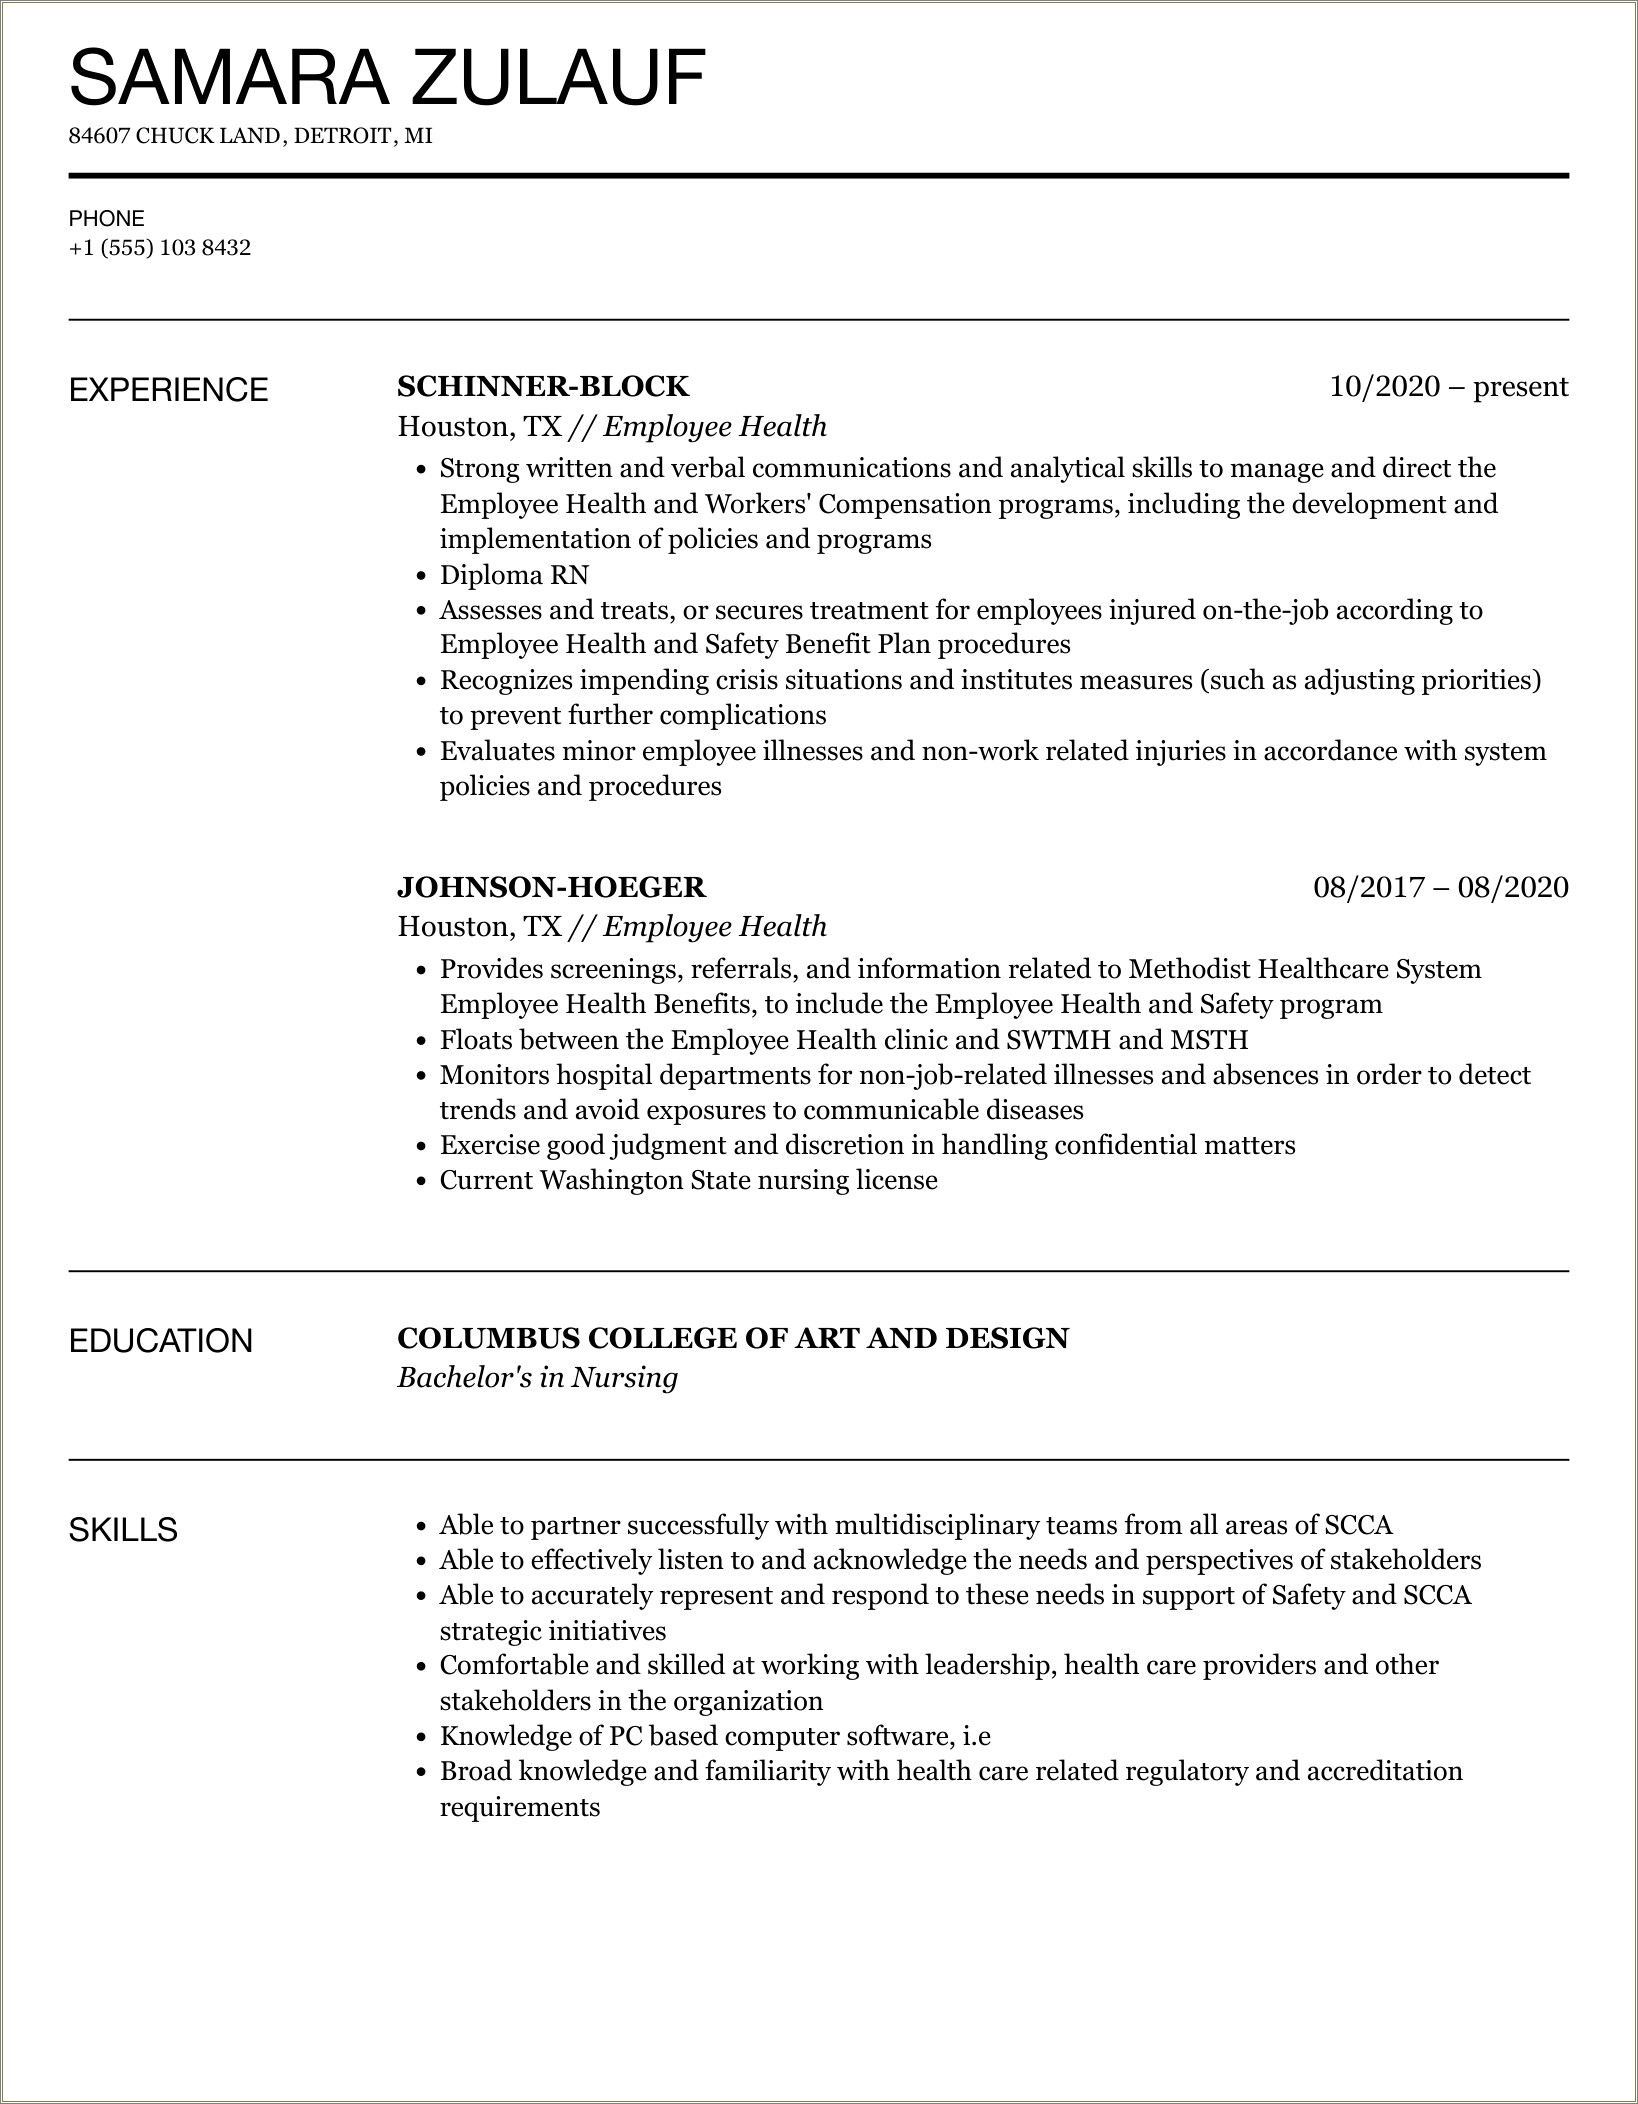 Resume Objective For Employee Health Nurse